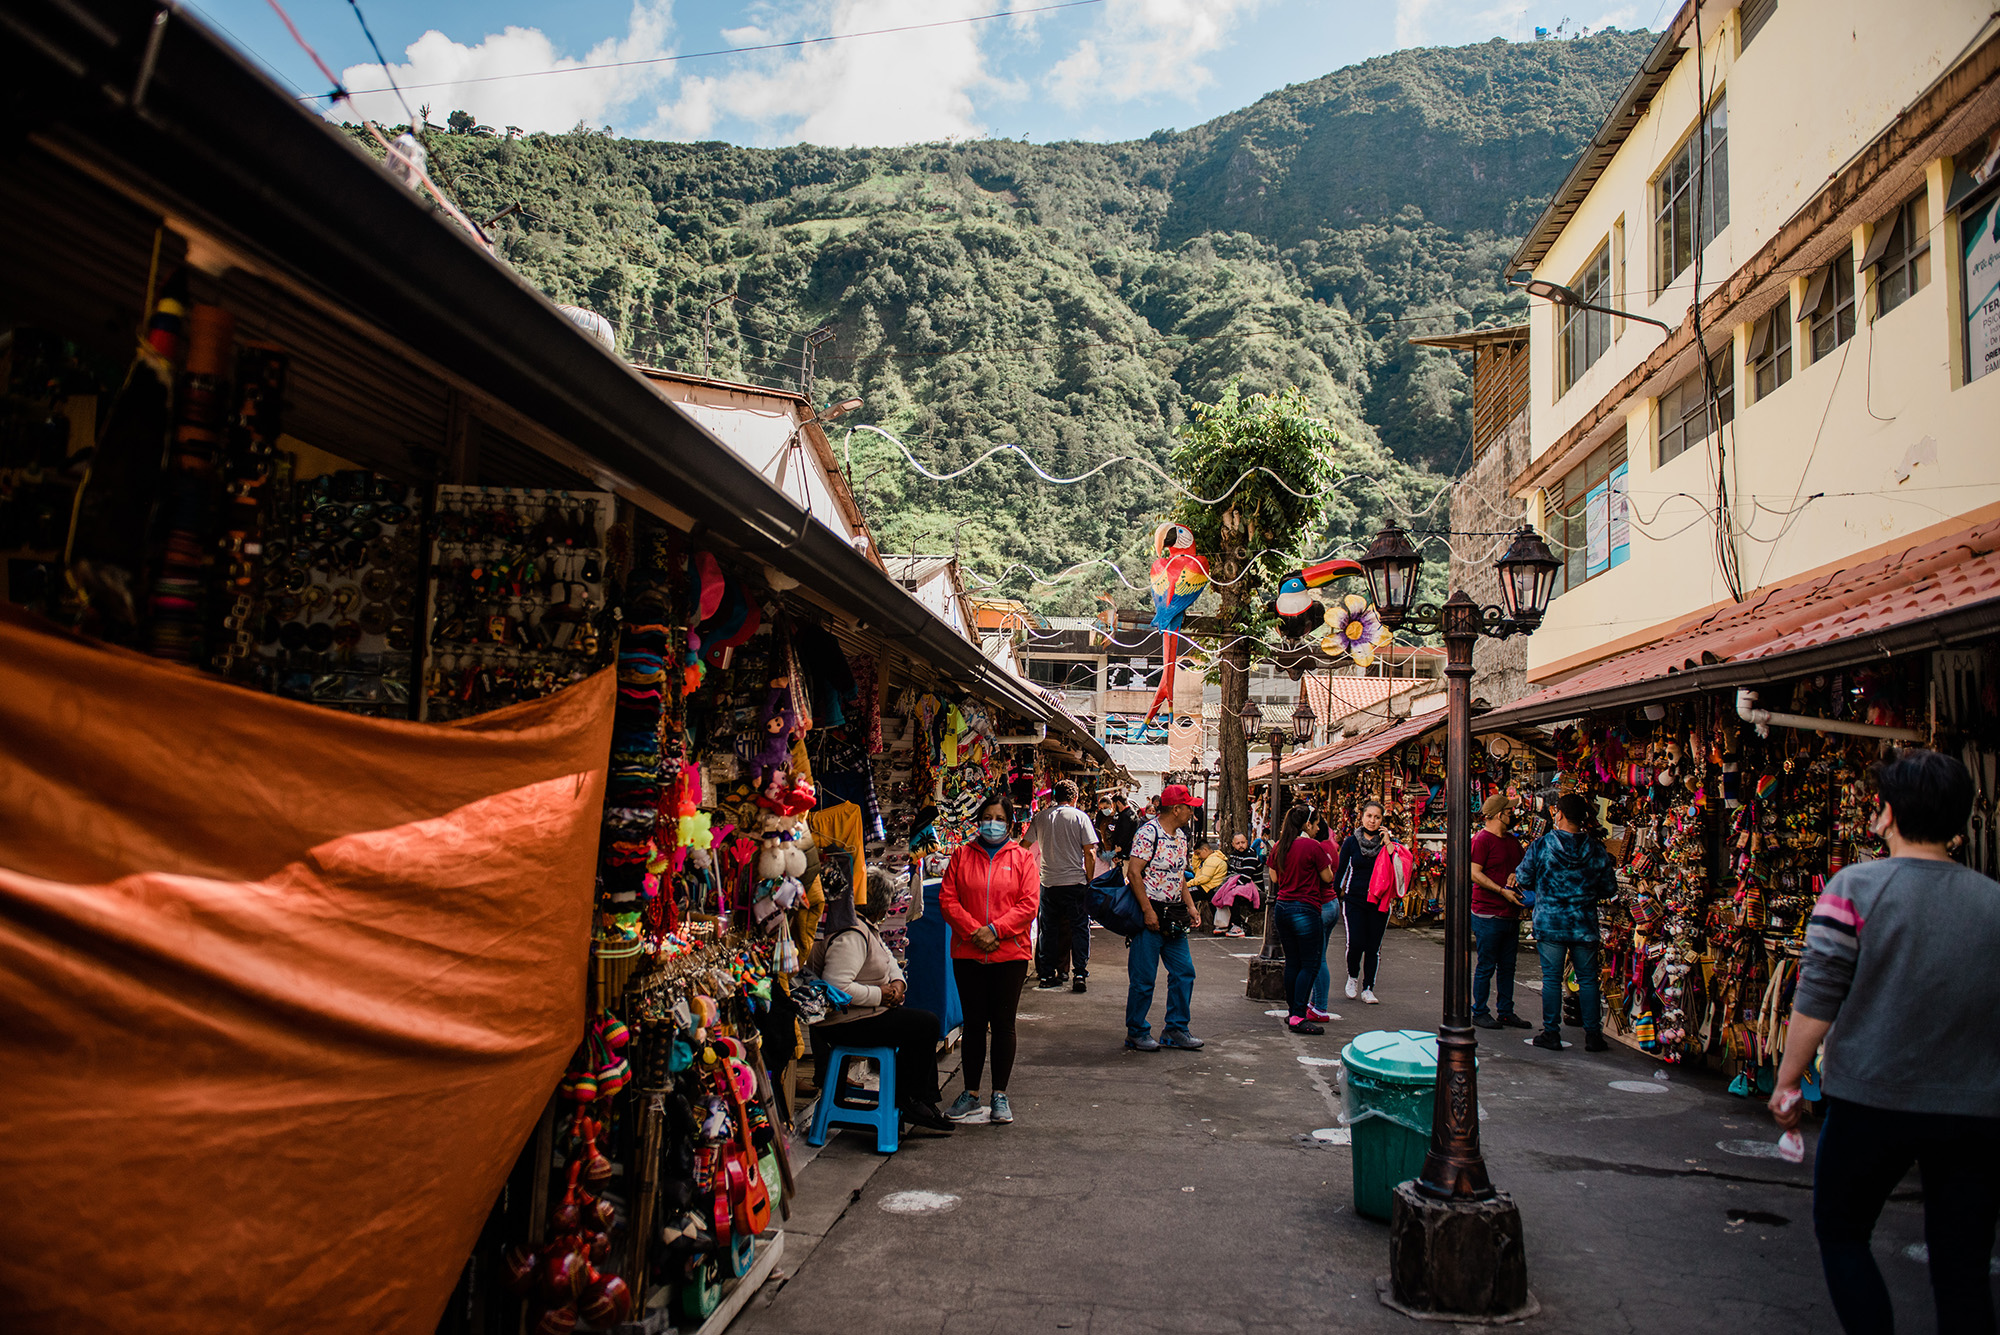 Baños, Ecuador